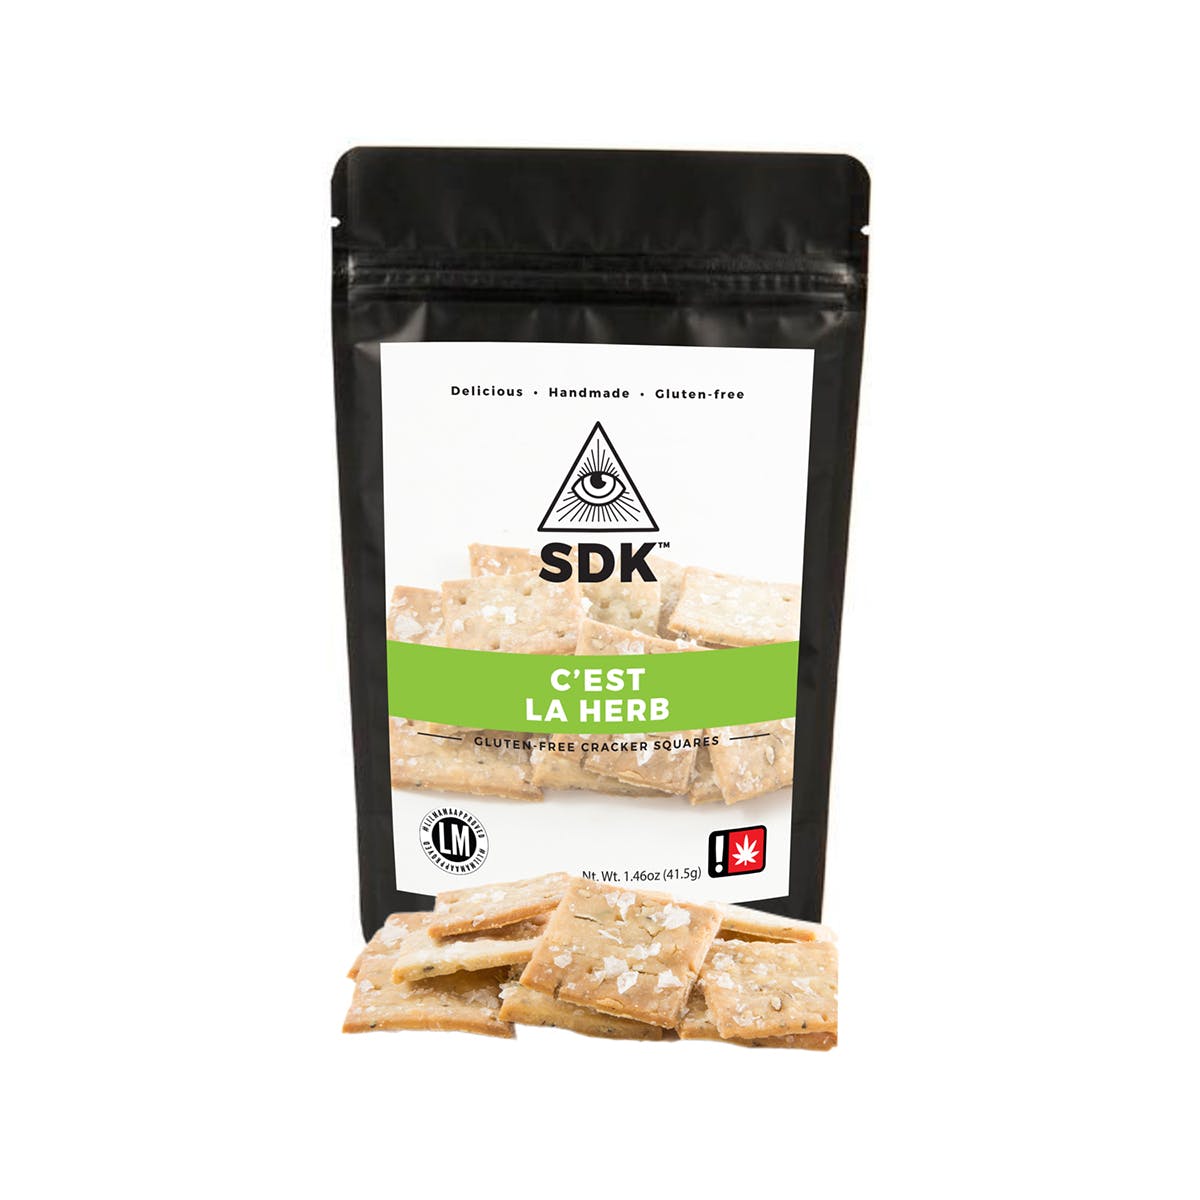 edible-cest-la-herb-glutenfree-cracker-5mg-single-pack